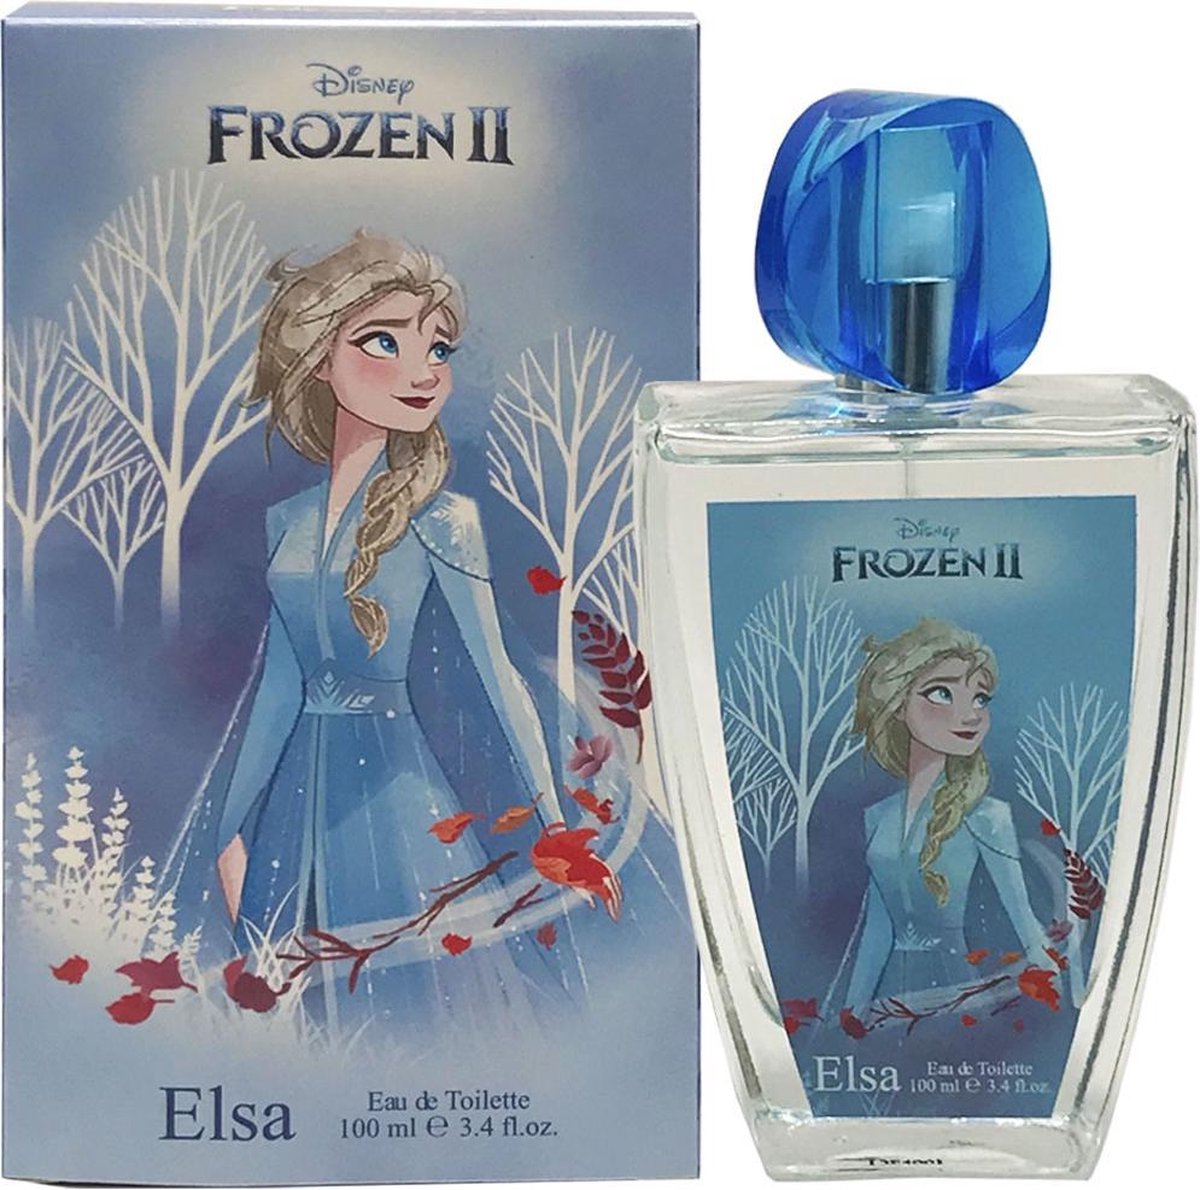 Disney Frozen 2 Elsa Castle - Eau de toilette - 100 ml - Disney Frozen